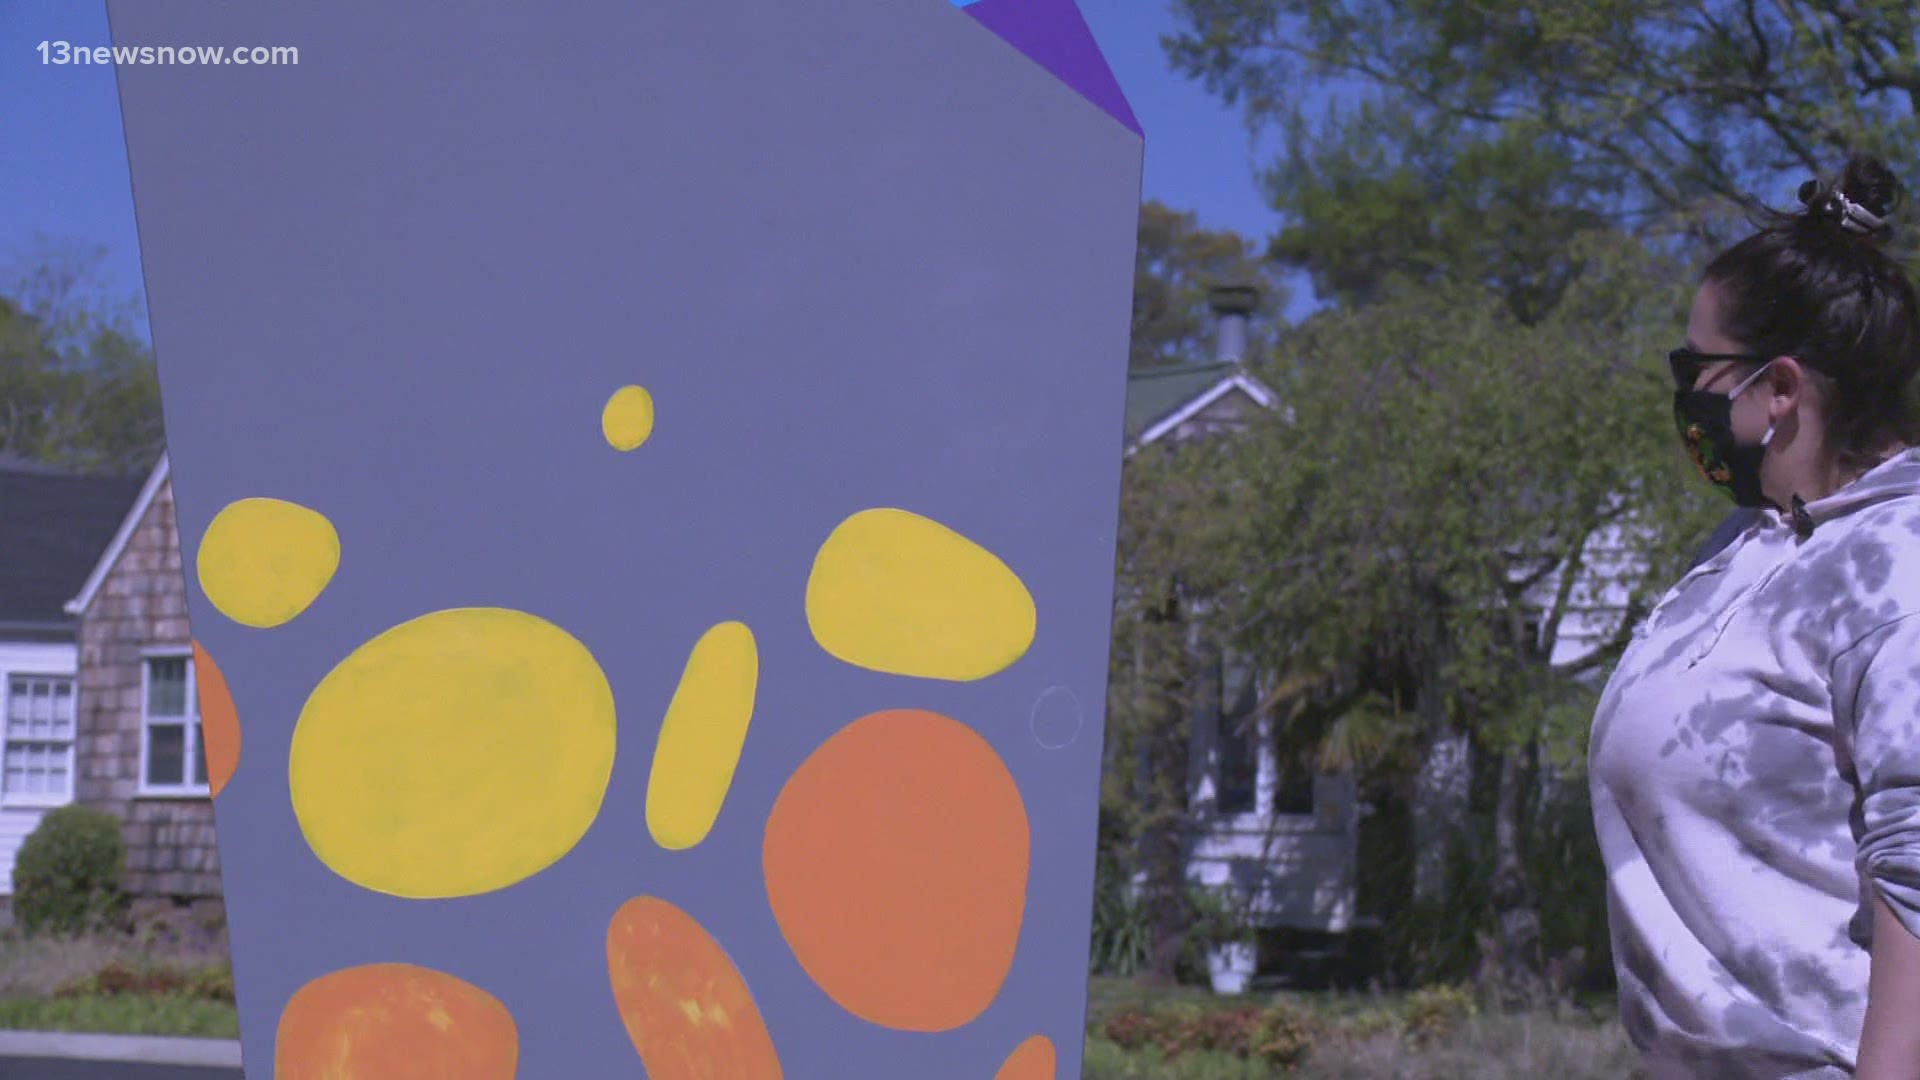 The painted pillars are part of the Neighborhood Identifier program in the Virginia Beach community.